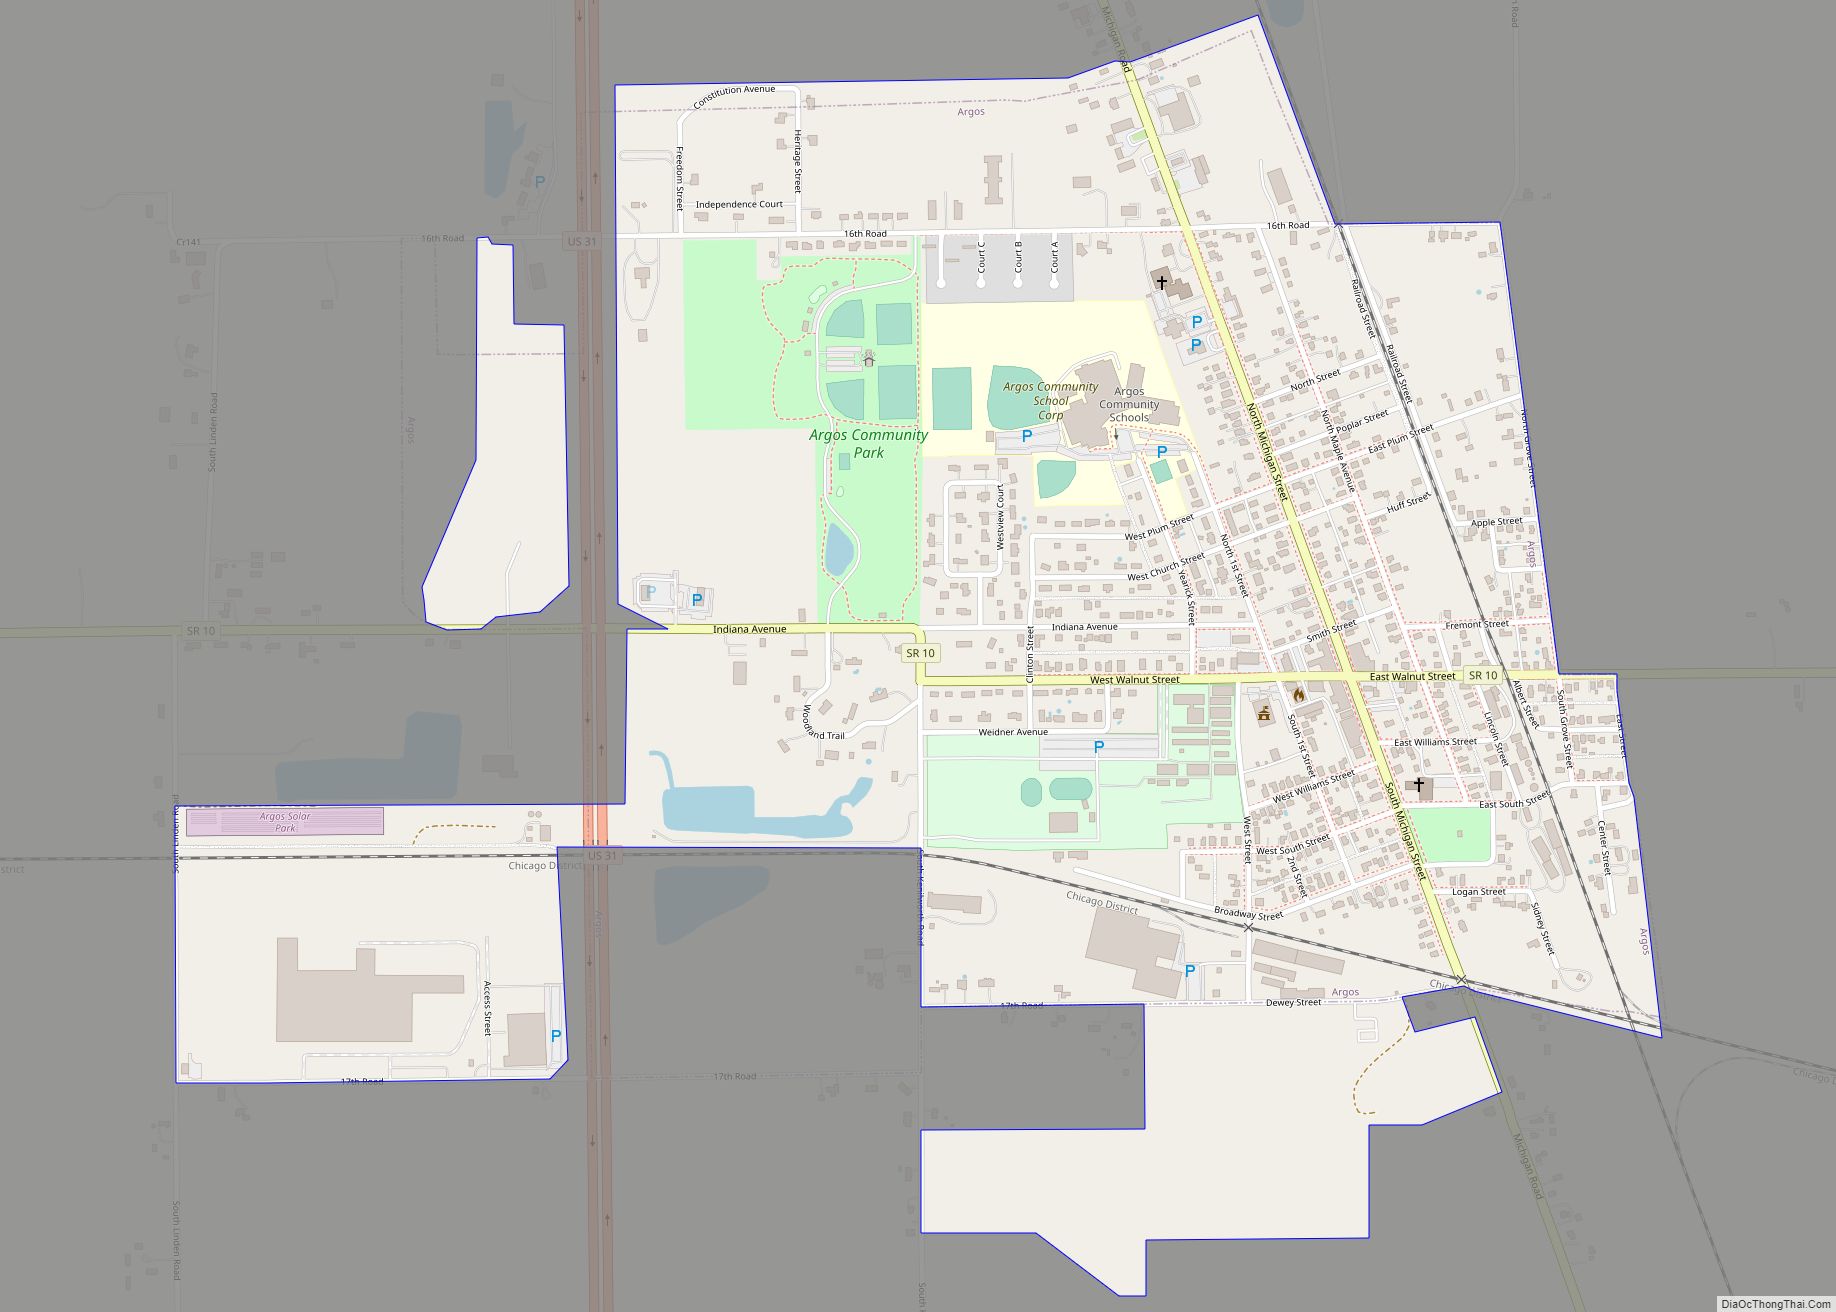 Map of Argos town